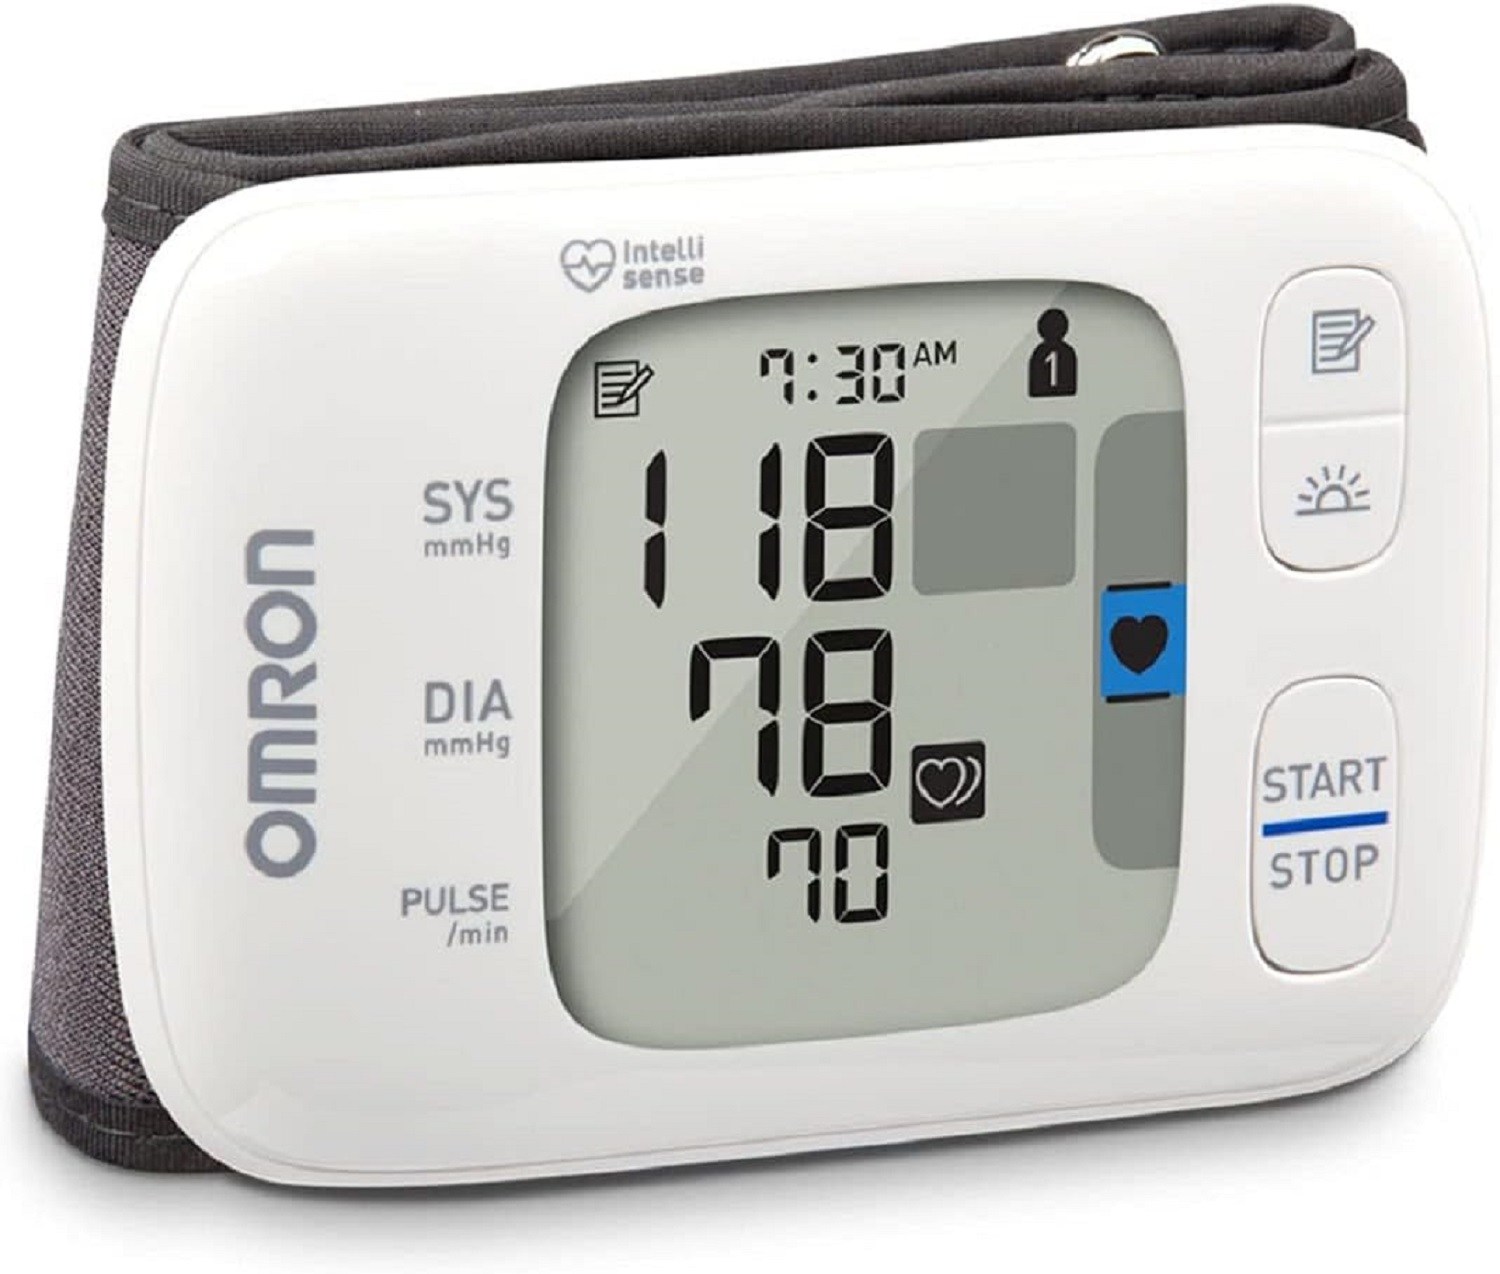 https://cdn.bestreviews.com/images/v4desktop/product-matrix/best-omron-blood-pressure-monitors-4.jpg